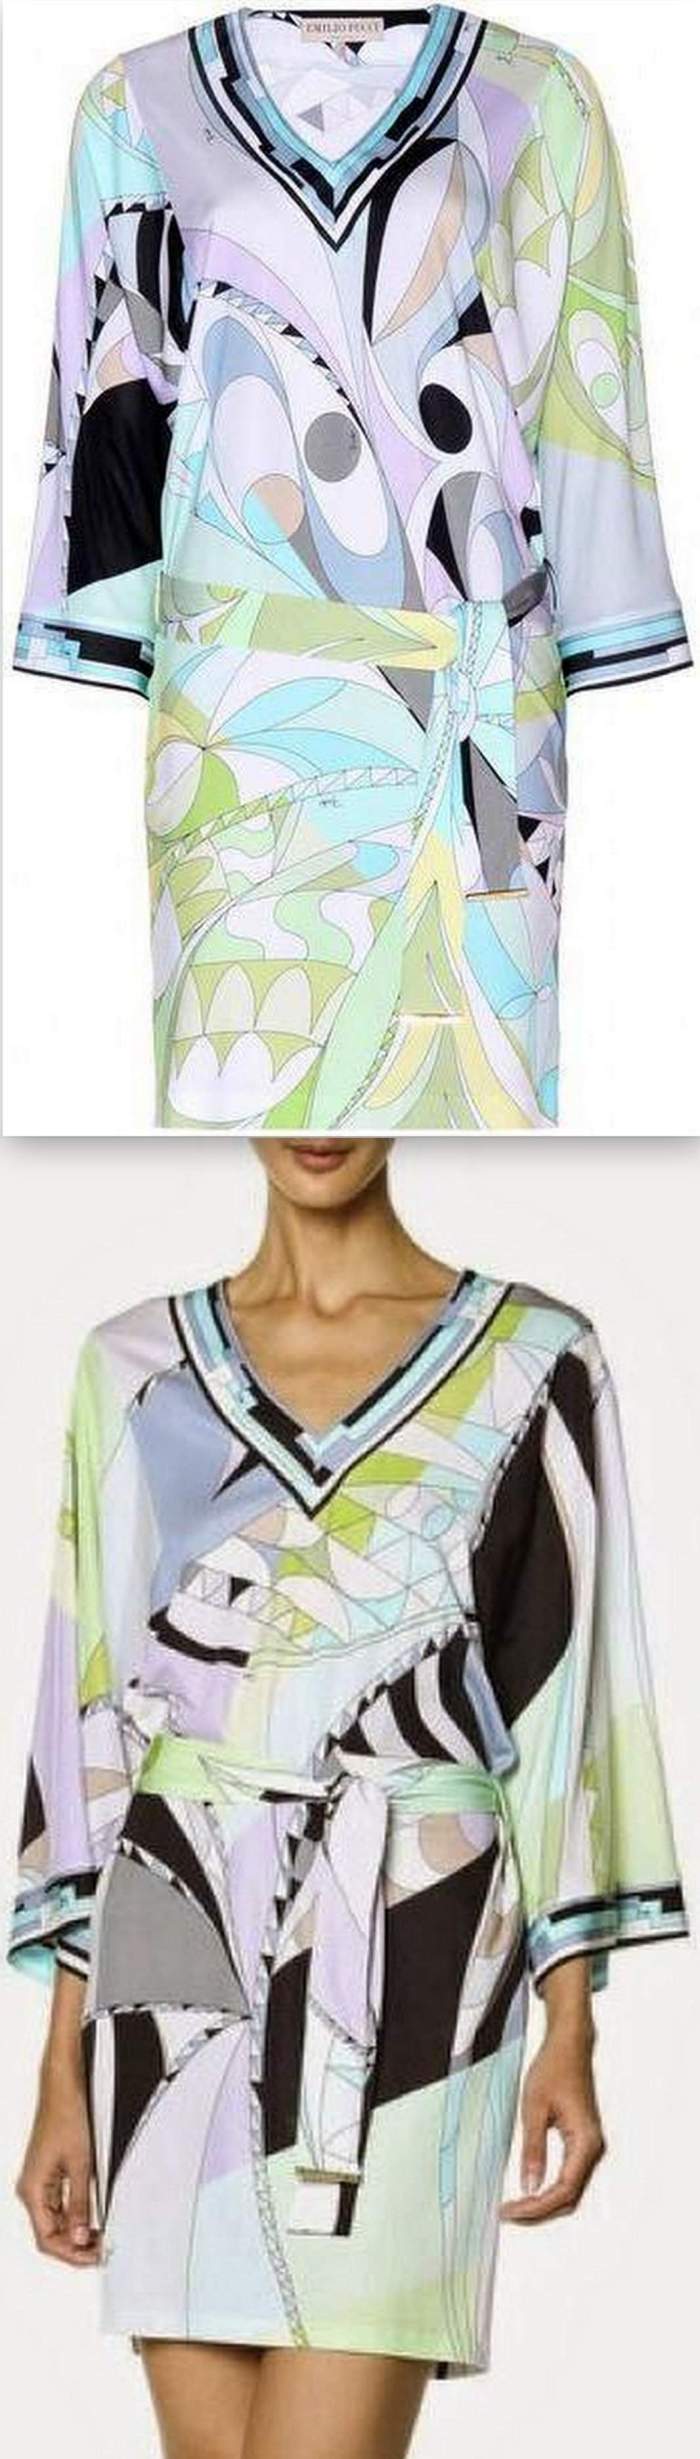 Color-Block Printed Jersey Silk Dress | DESIGNER INSPIRED FASHIONS